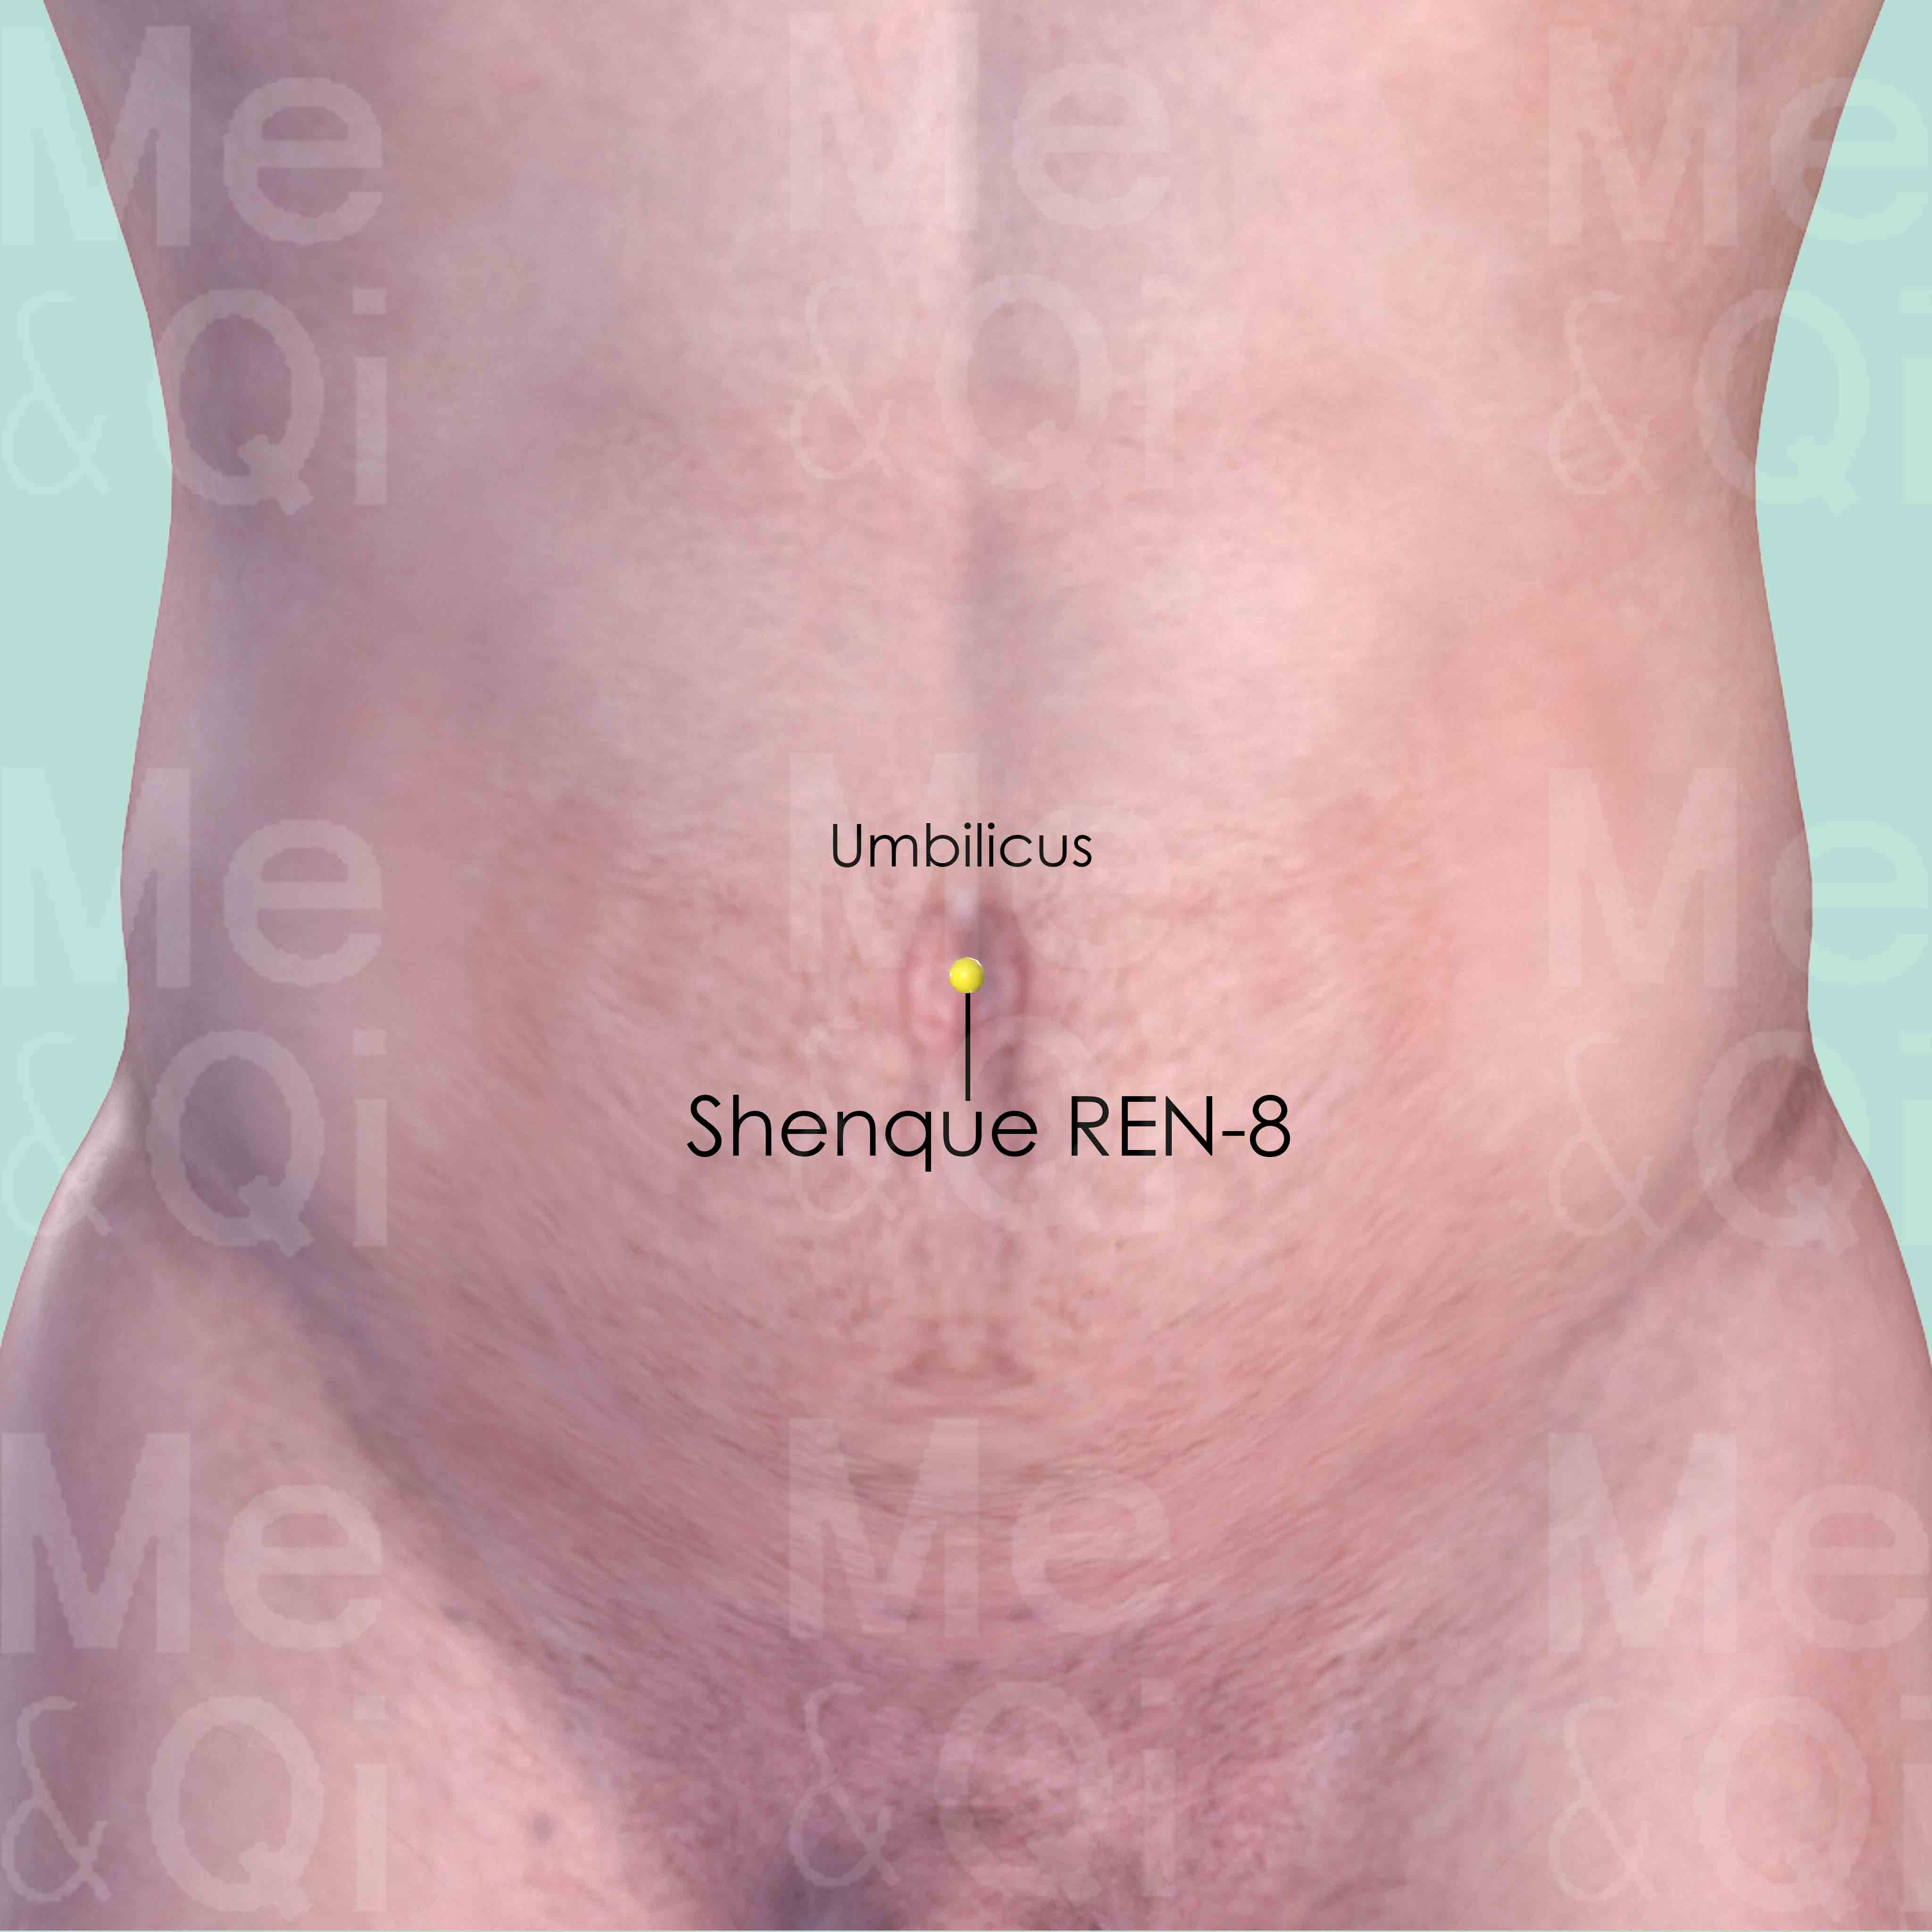 Shenque REN-8